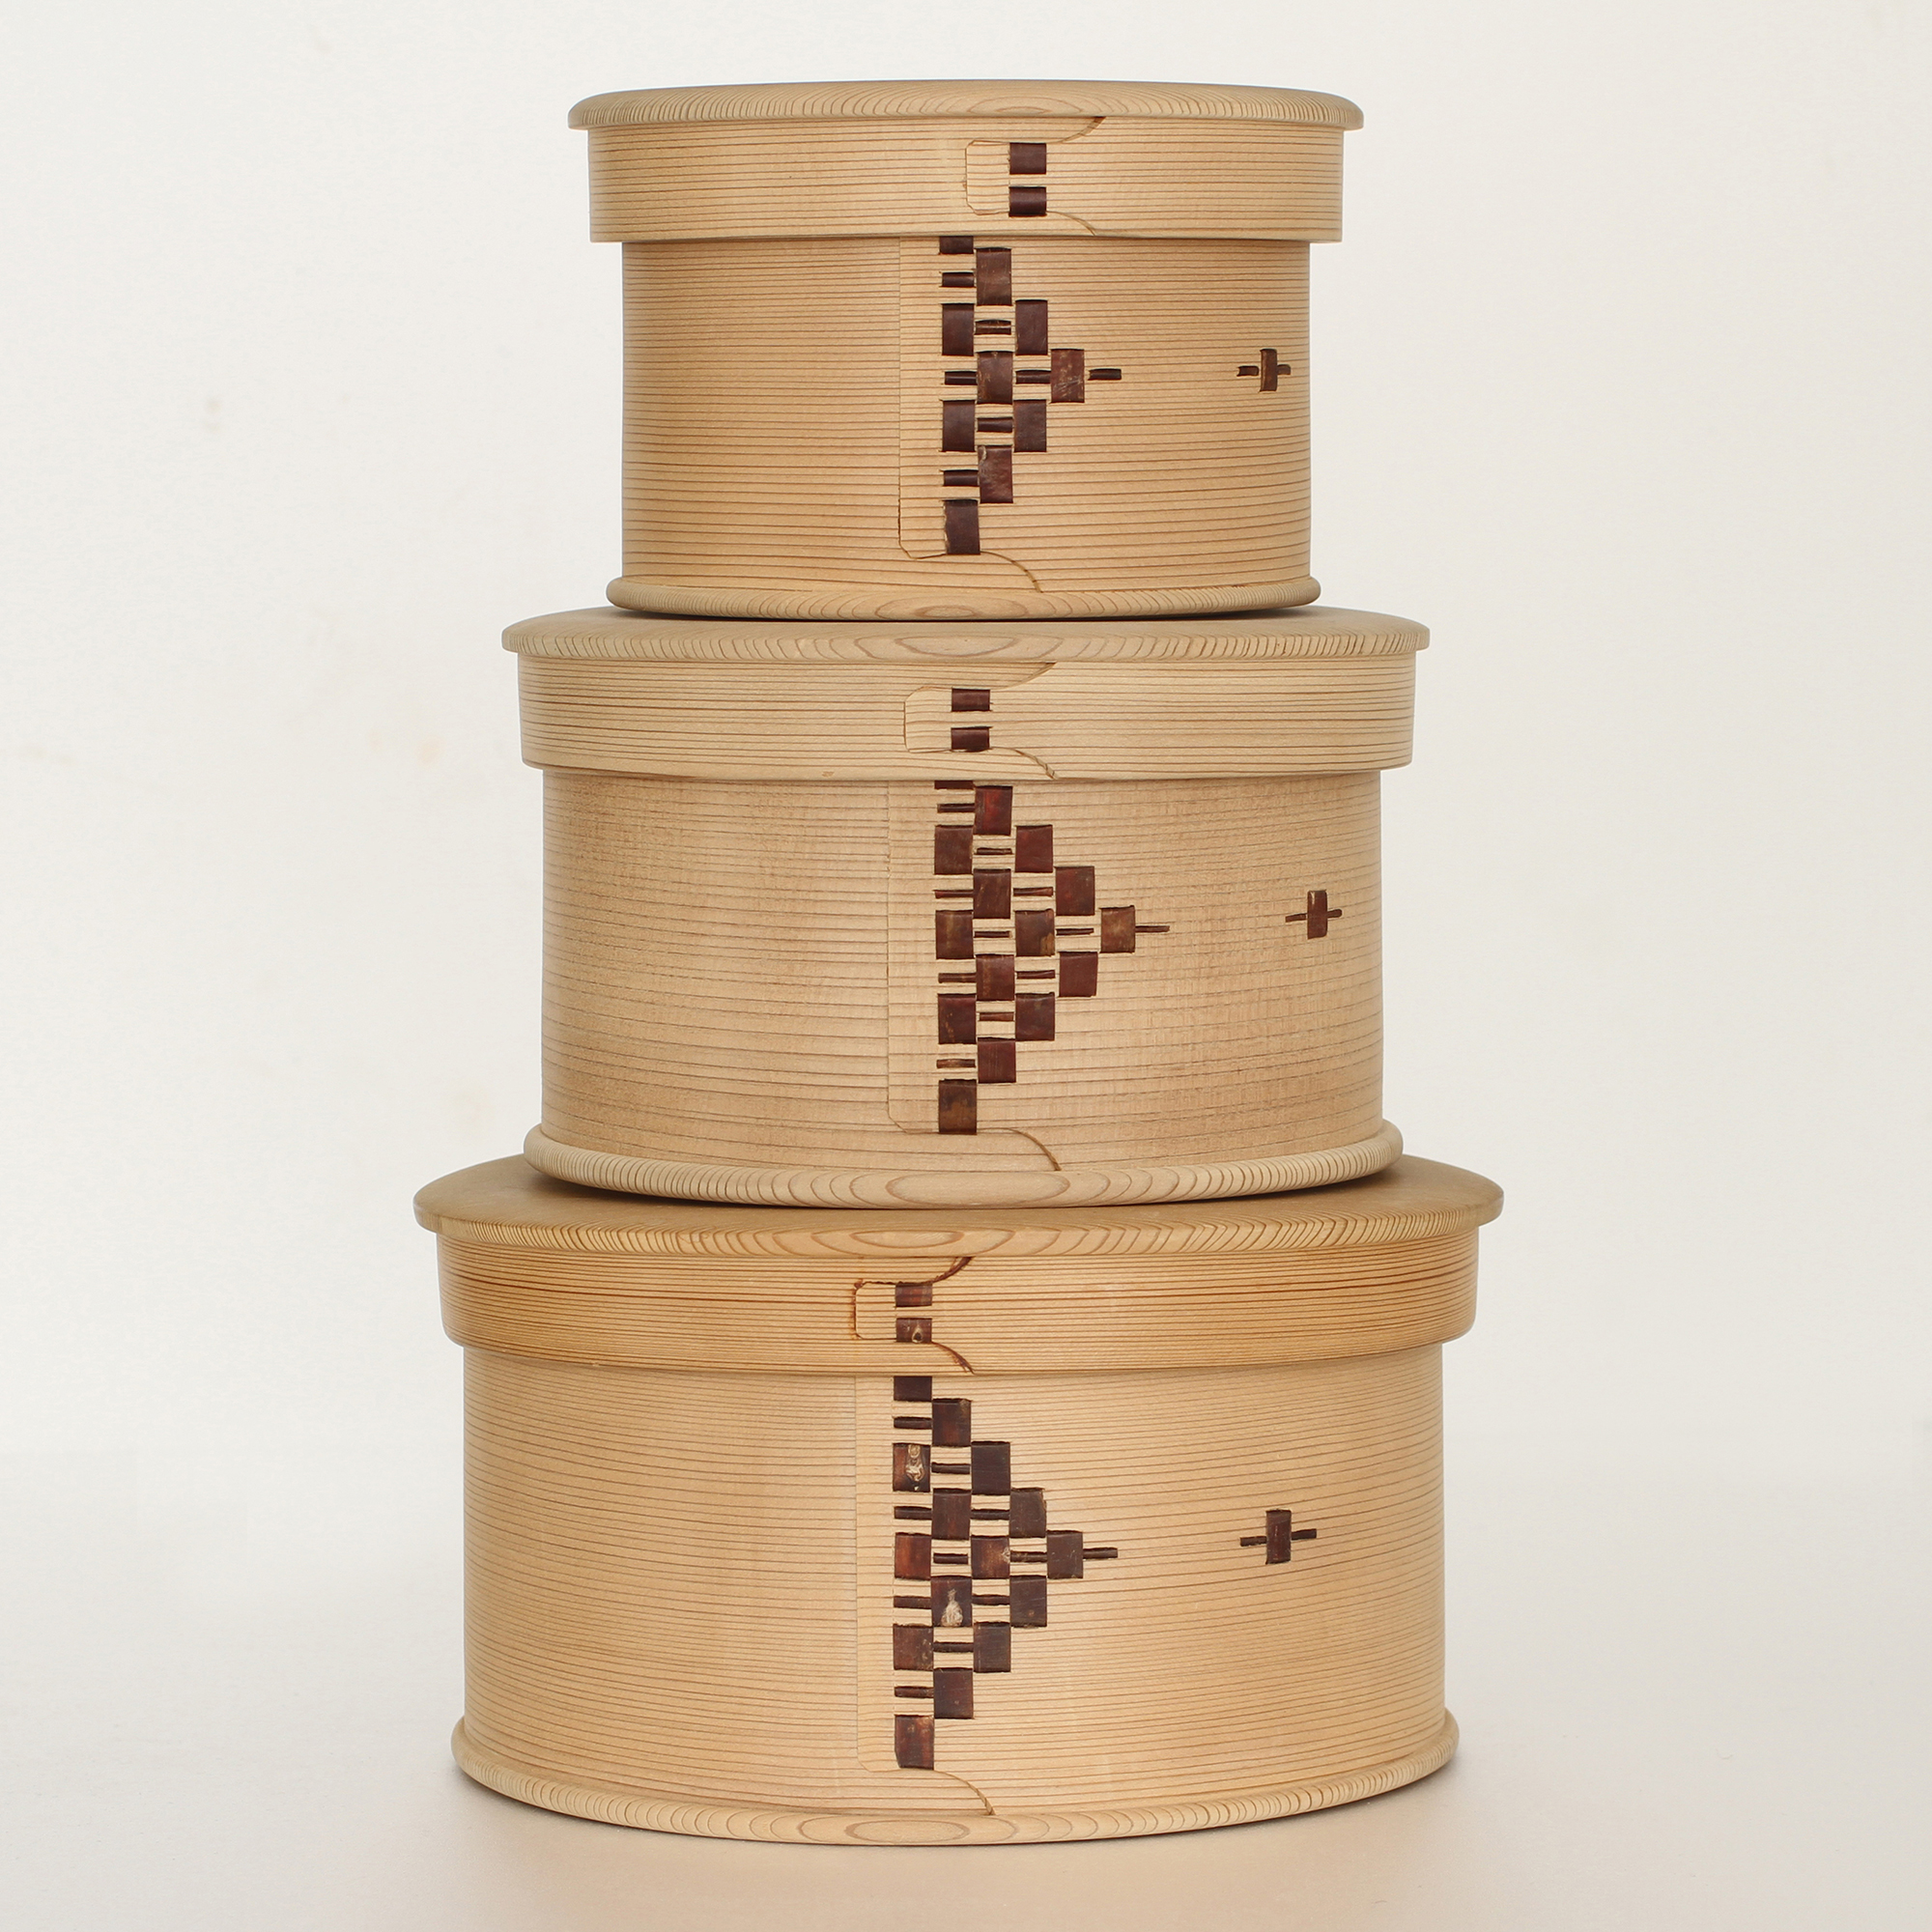 木工品・竹工品の伝統的工芸品 | KOUGE EXPO 2020 ONLINE